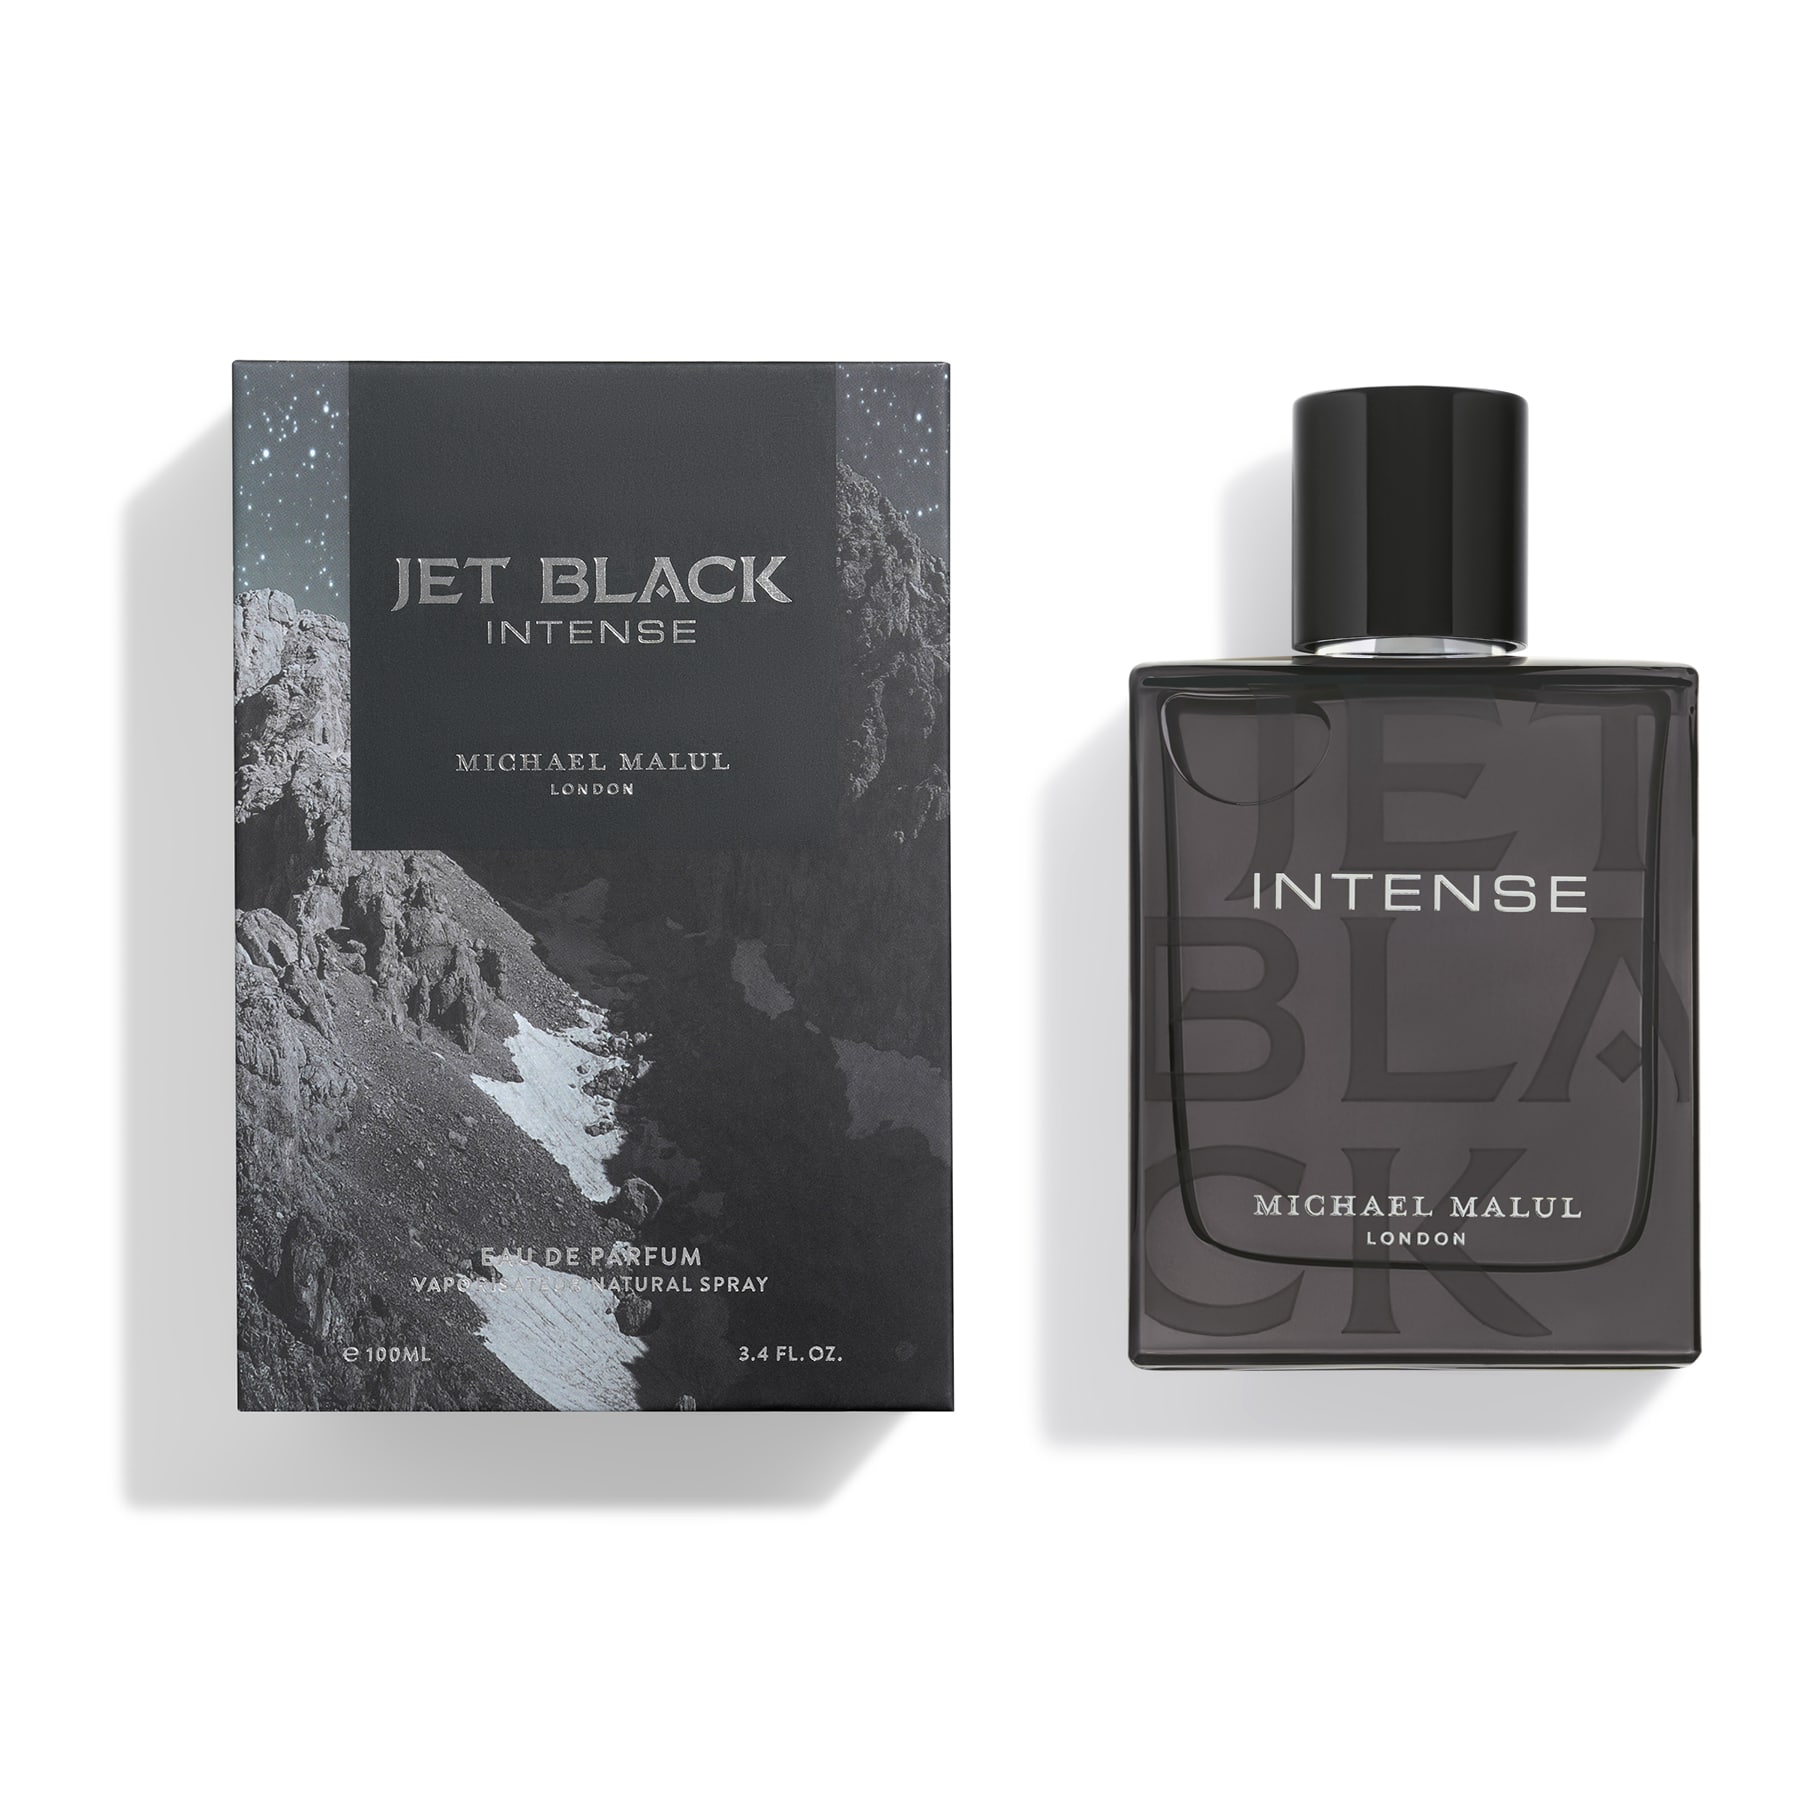 Jet Black Intense – Michael Malul